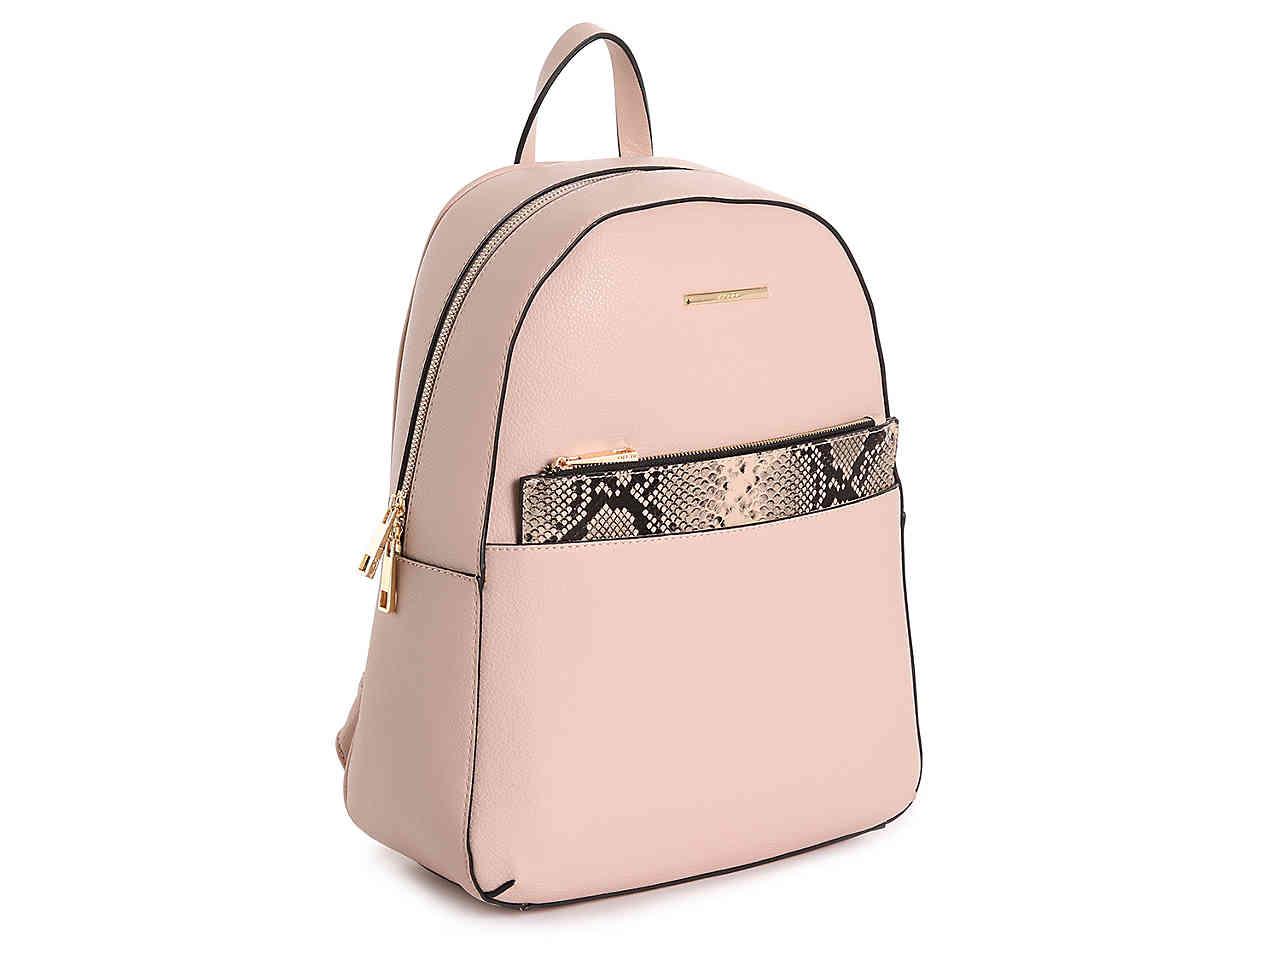 ALDO Mini Backpack Purse Bag Snake Skin Print Black & White Small NEW | eBay